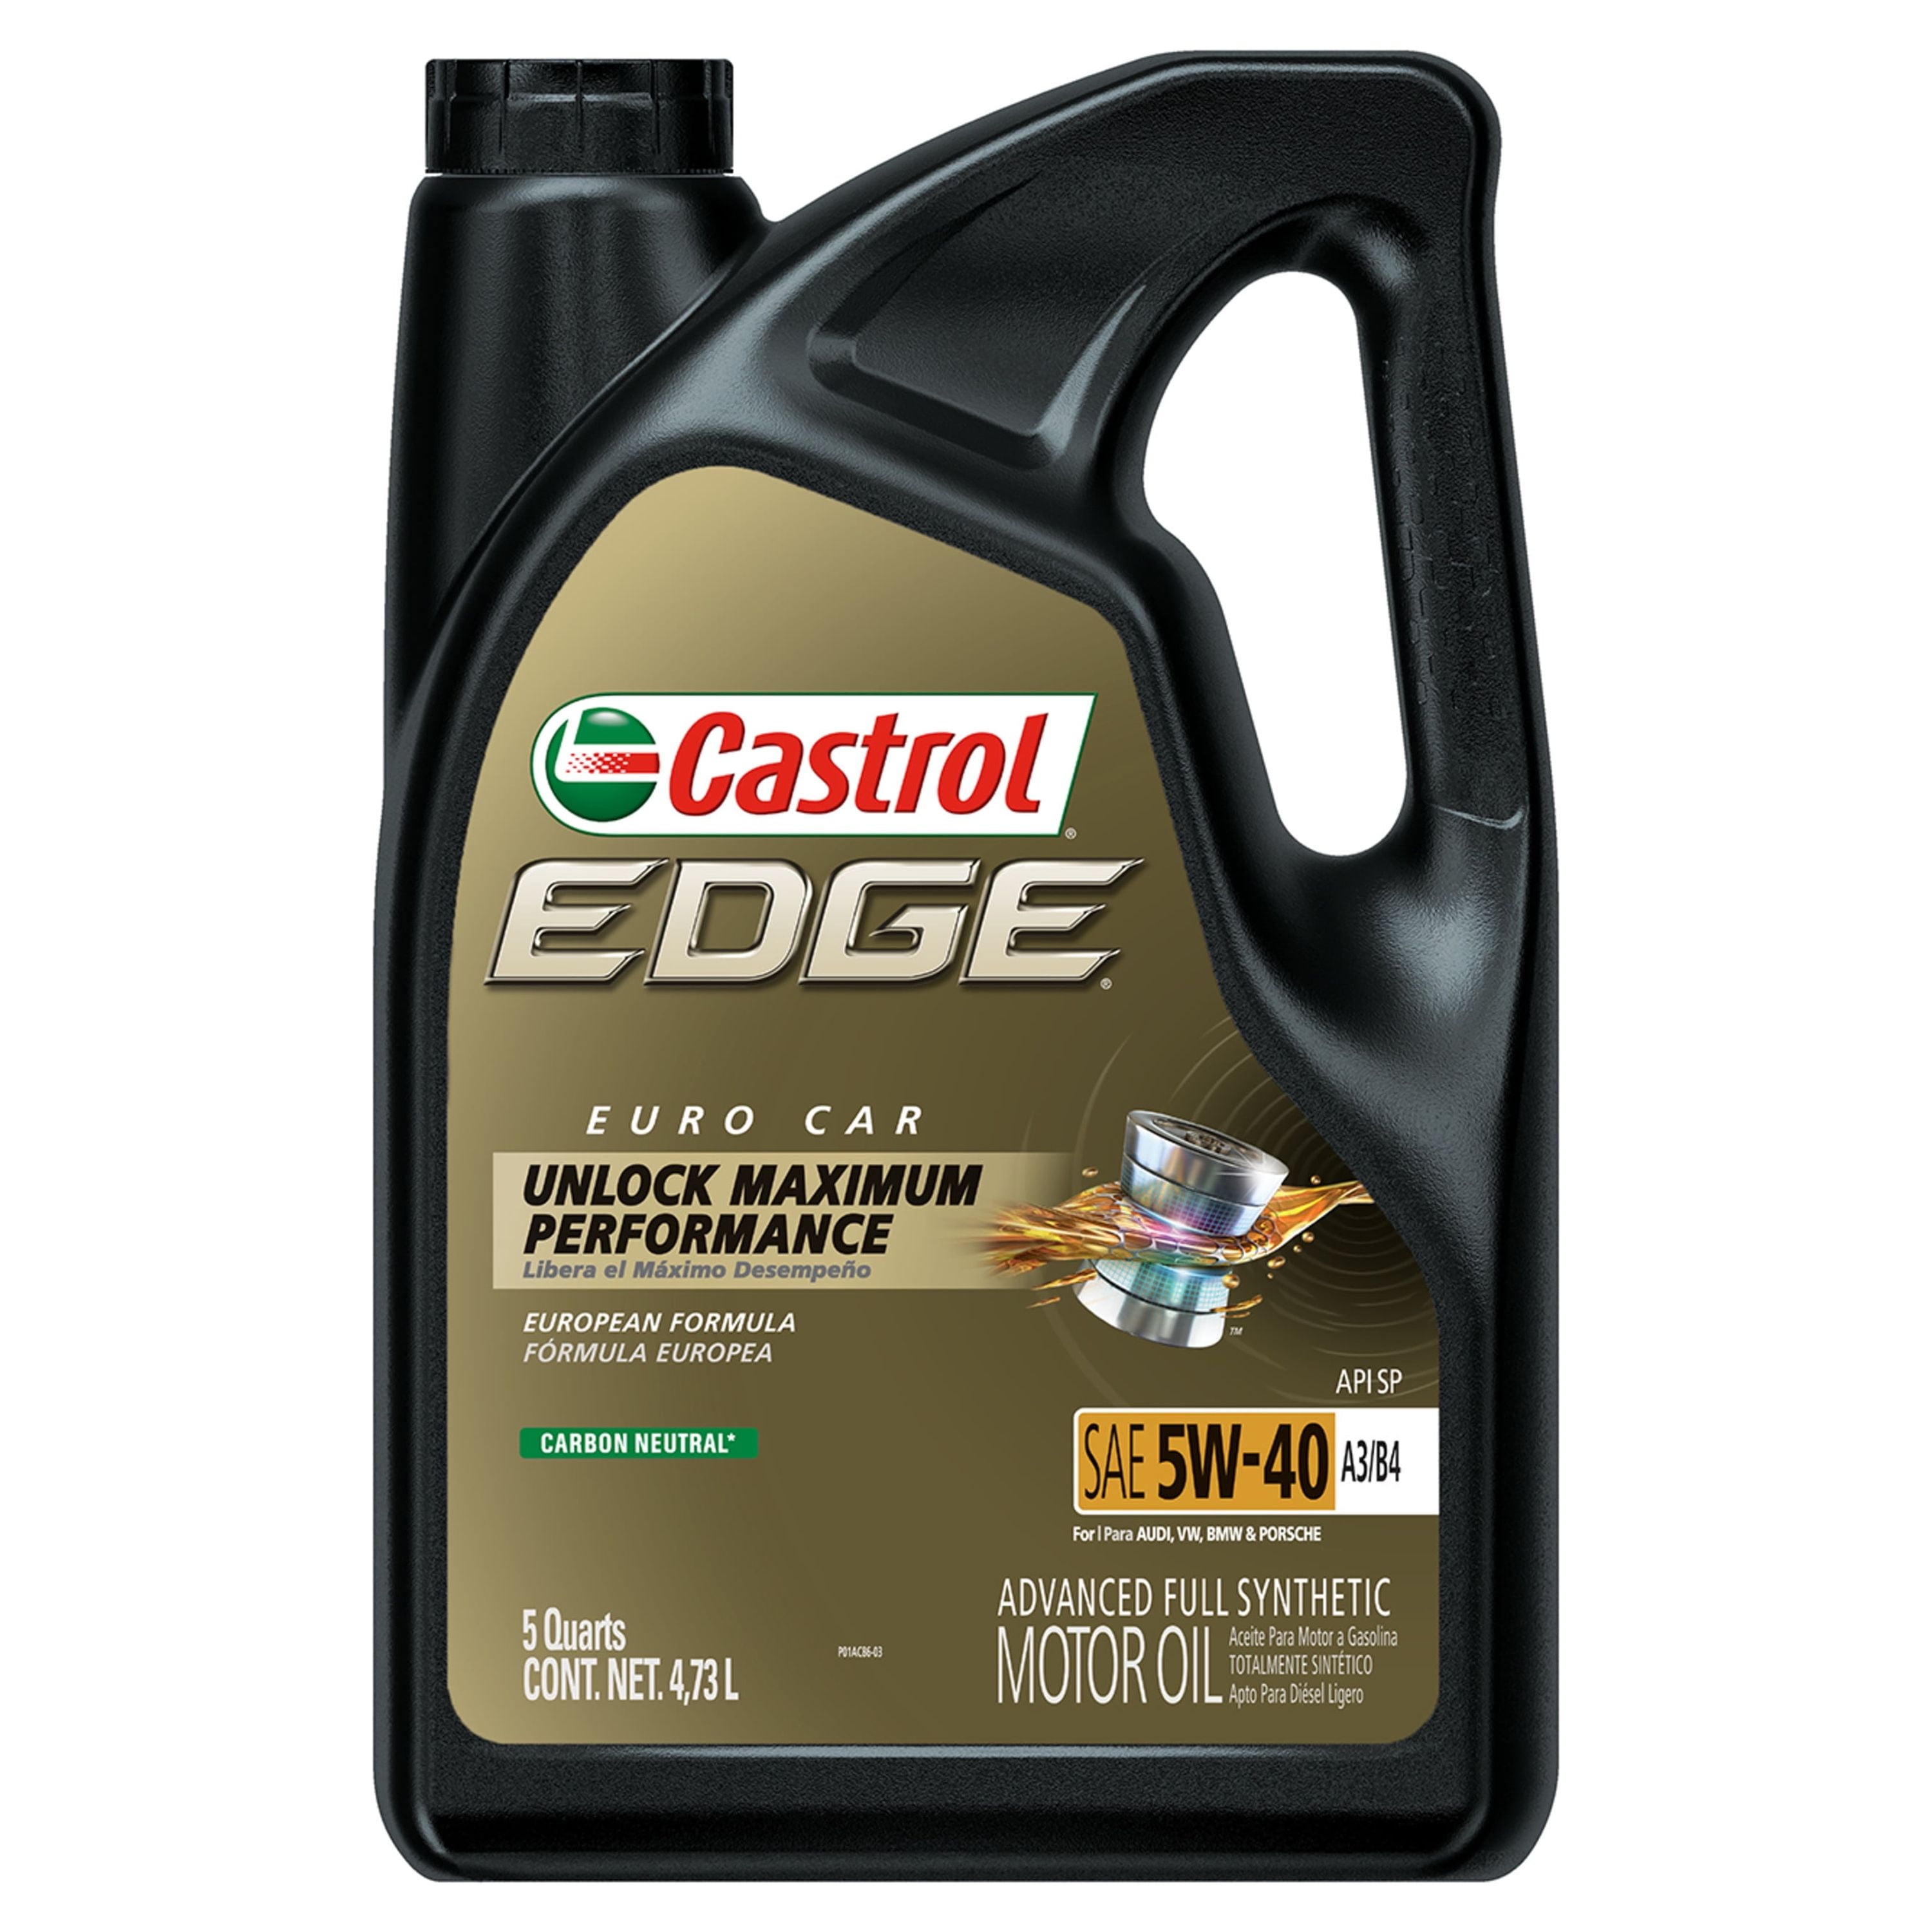 Aceite Castrol Edge 5W30 M · BMW Longlife-04